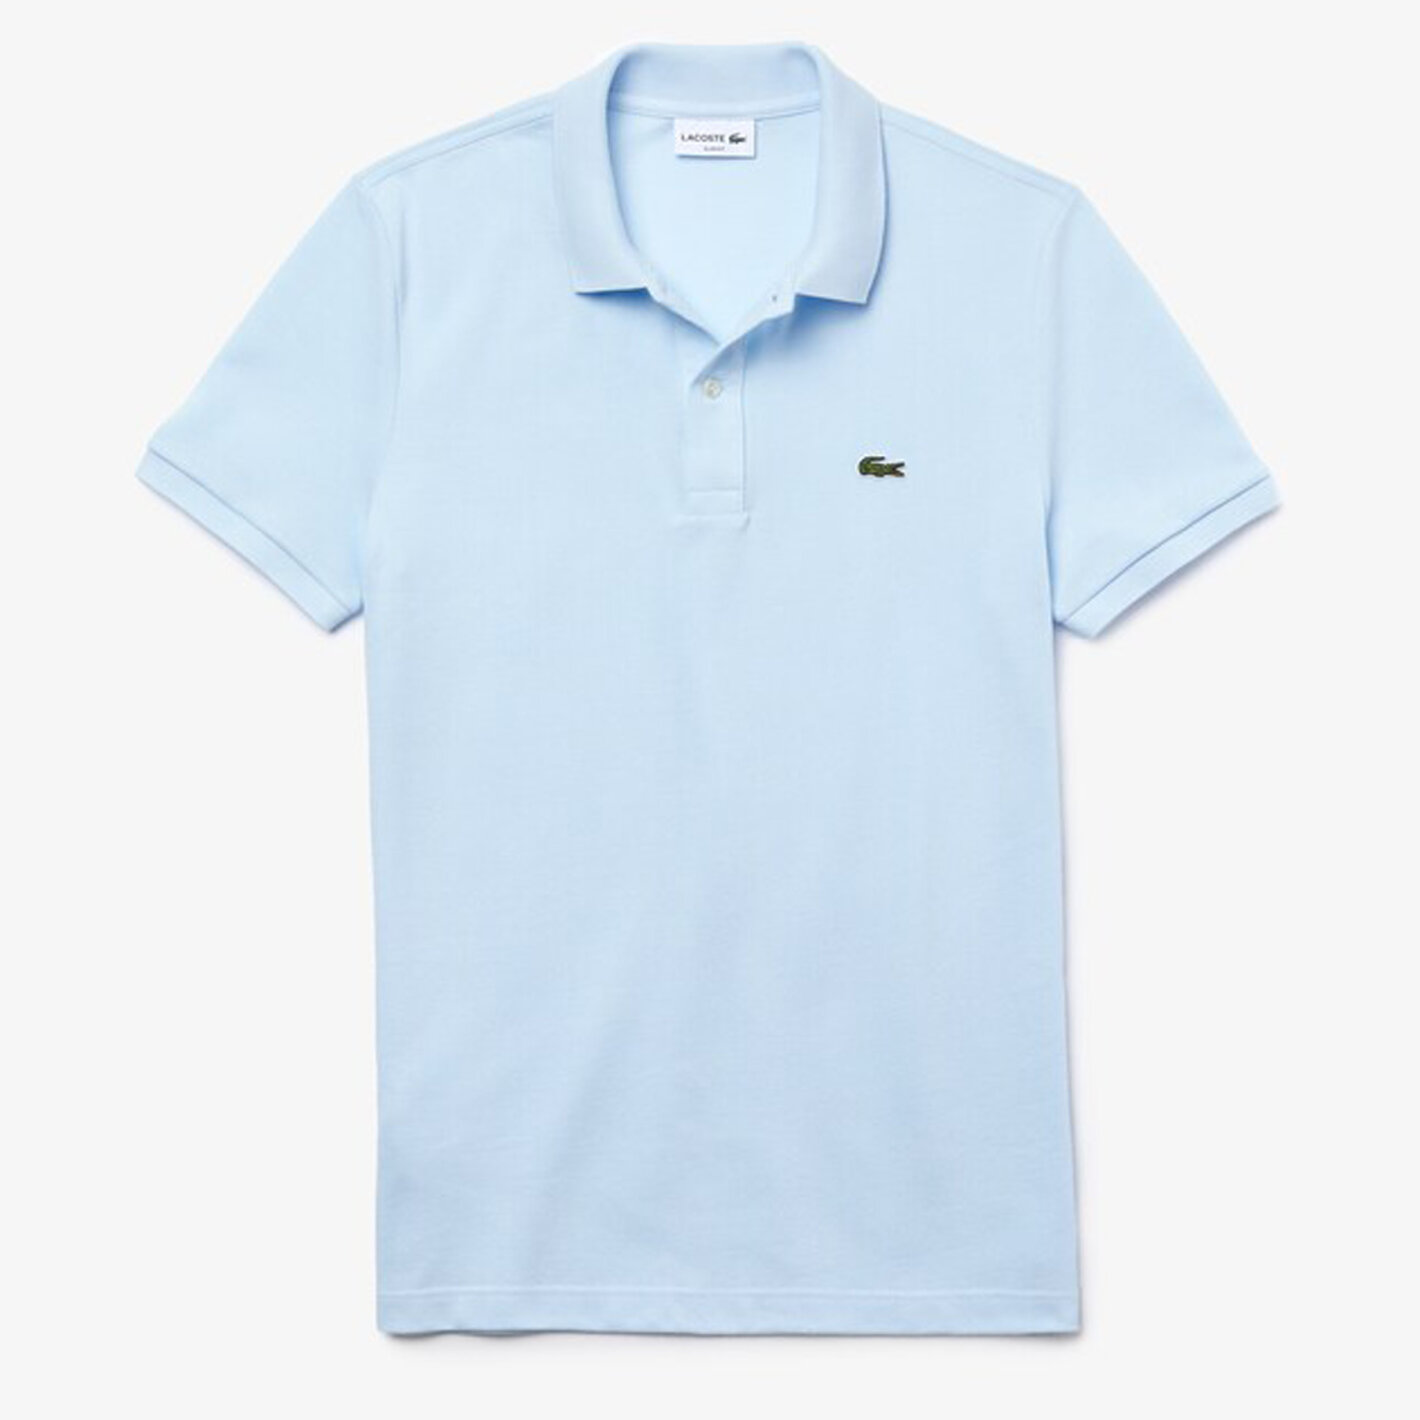 Shop nu Lacoste Polo T-shirt i Lys blå - Fri